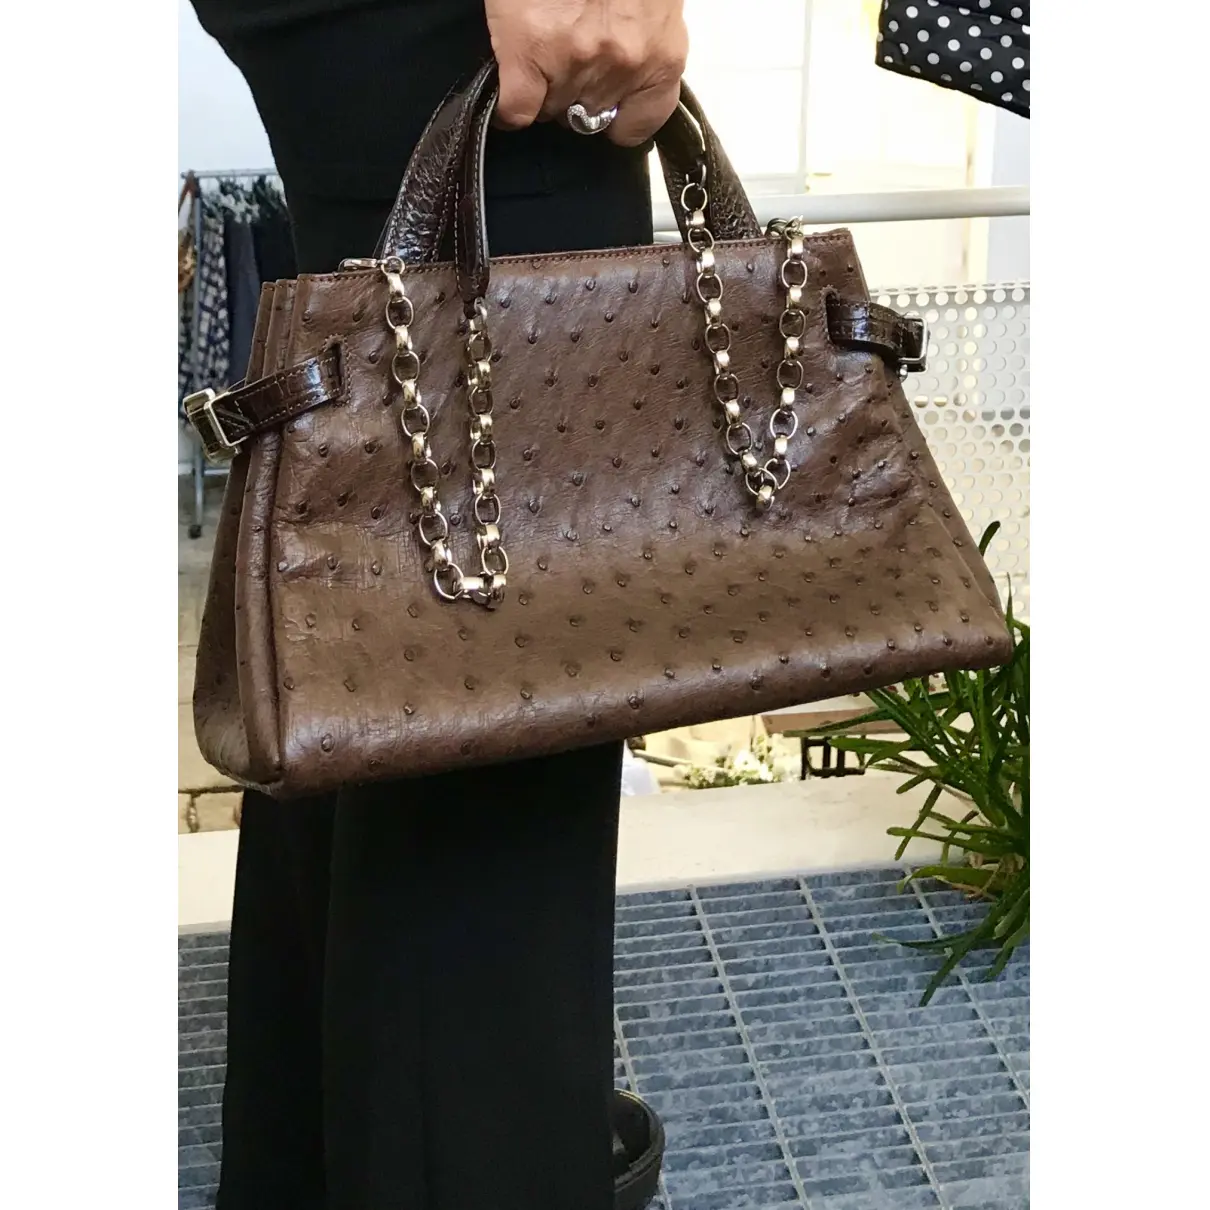 Ostrich handbag Colombo